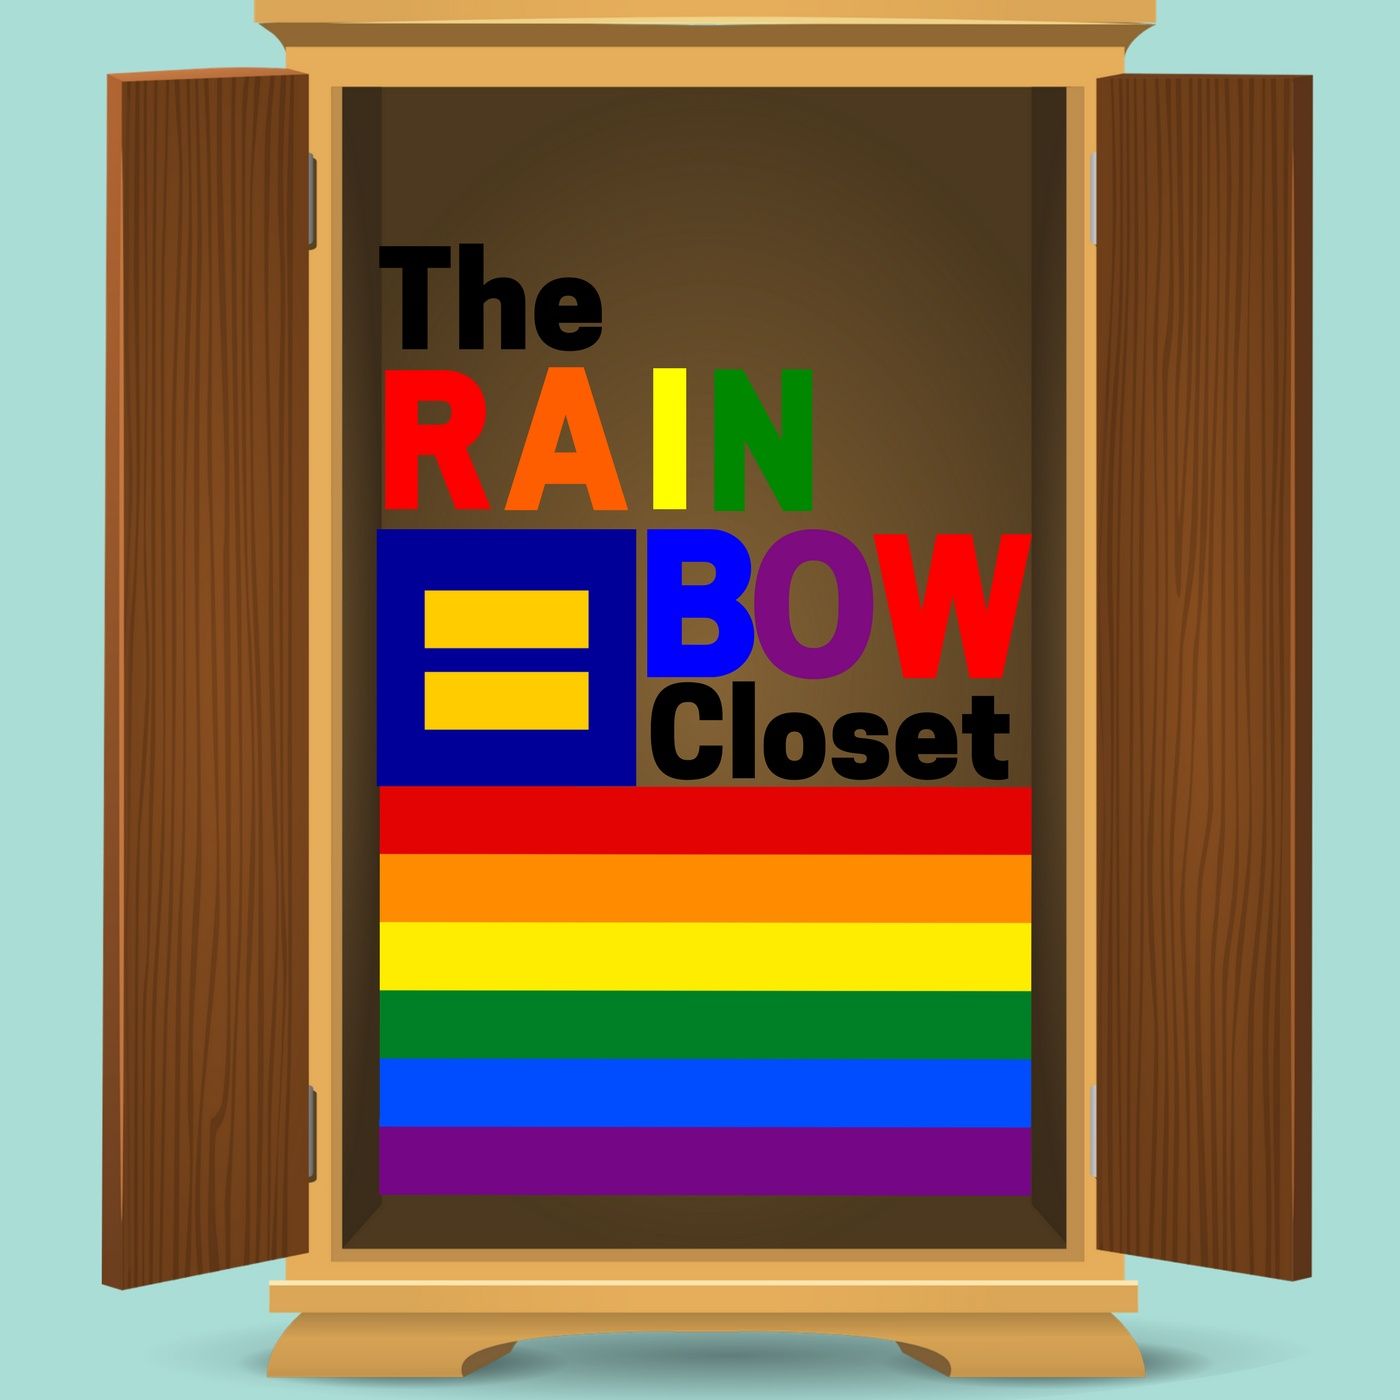 The Rainbow Closet